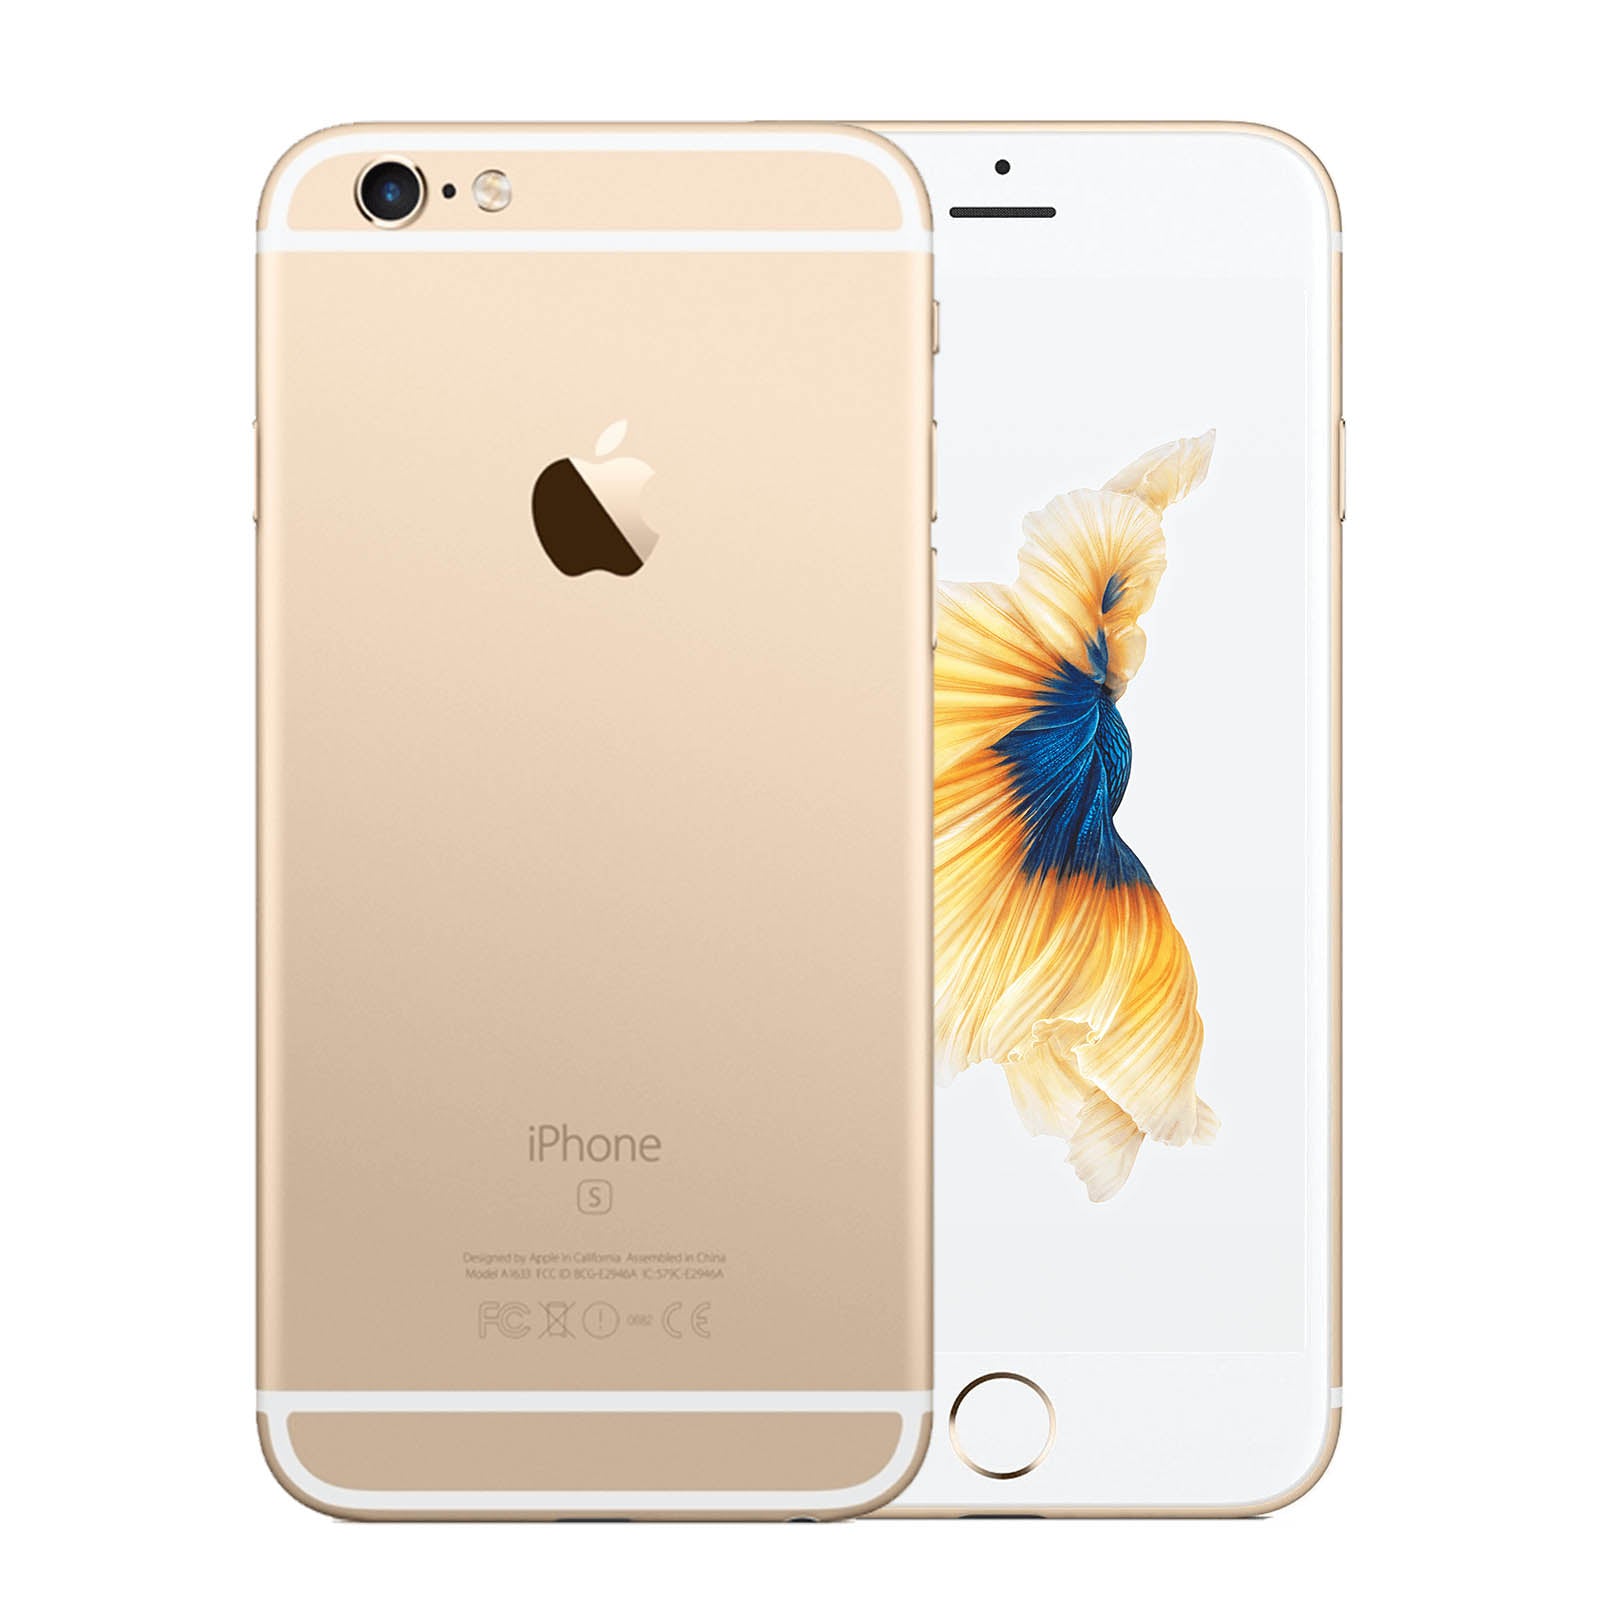 Apple iPhone 6S Plus 16GB Gold Very Good - Unlocked